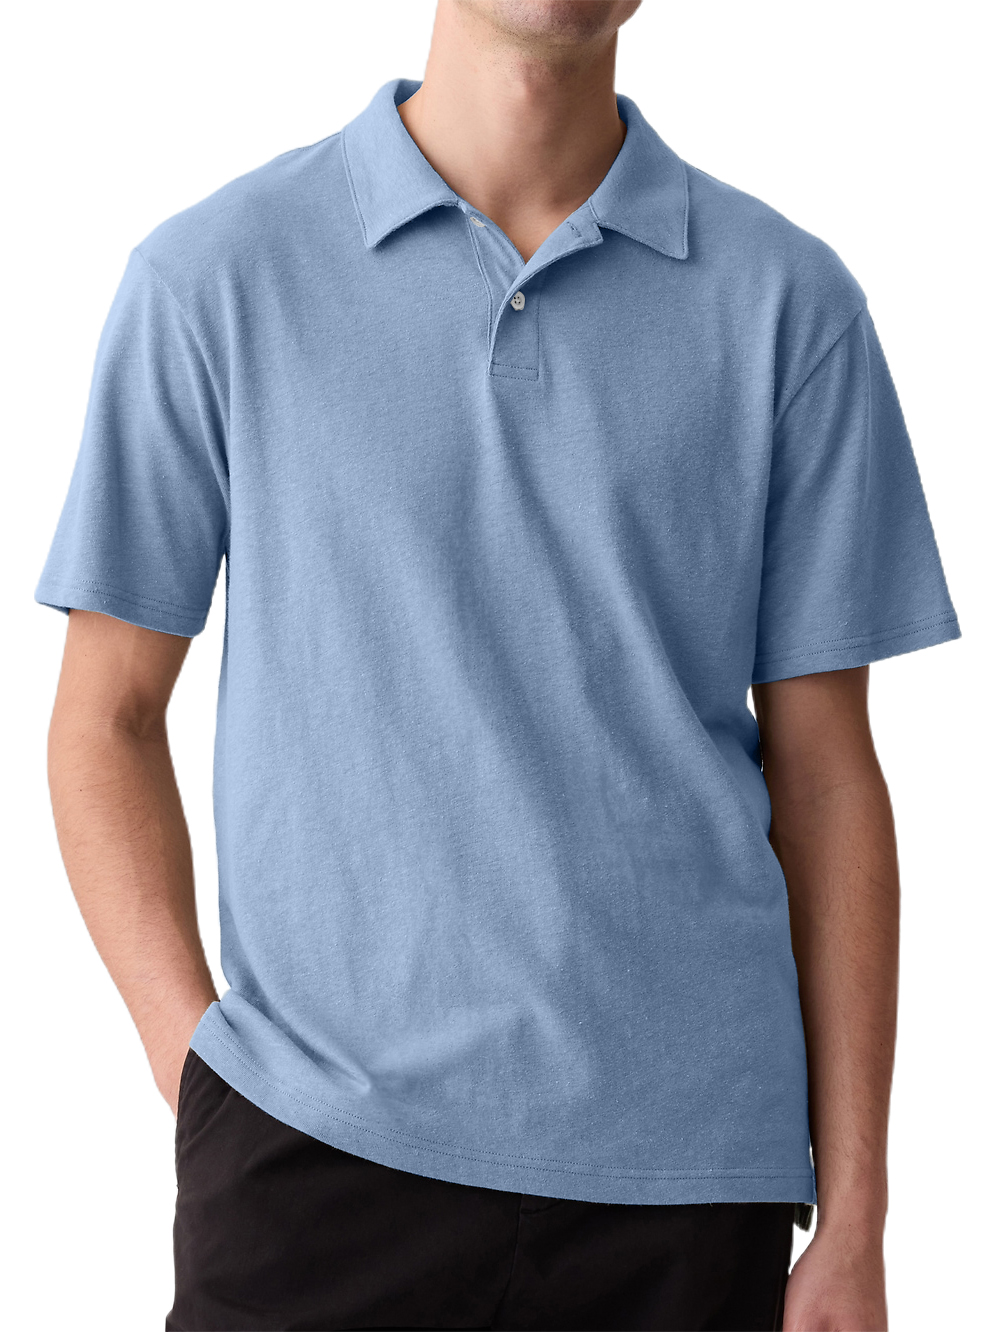 Men's Basic Soft, Comfortable And Versatile Polo Top